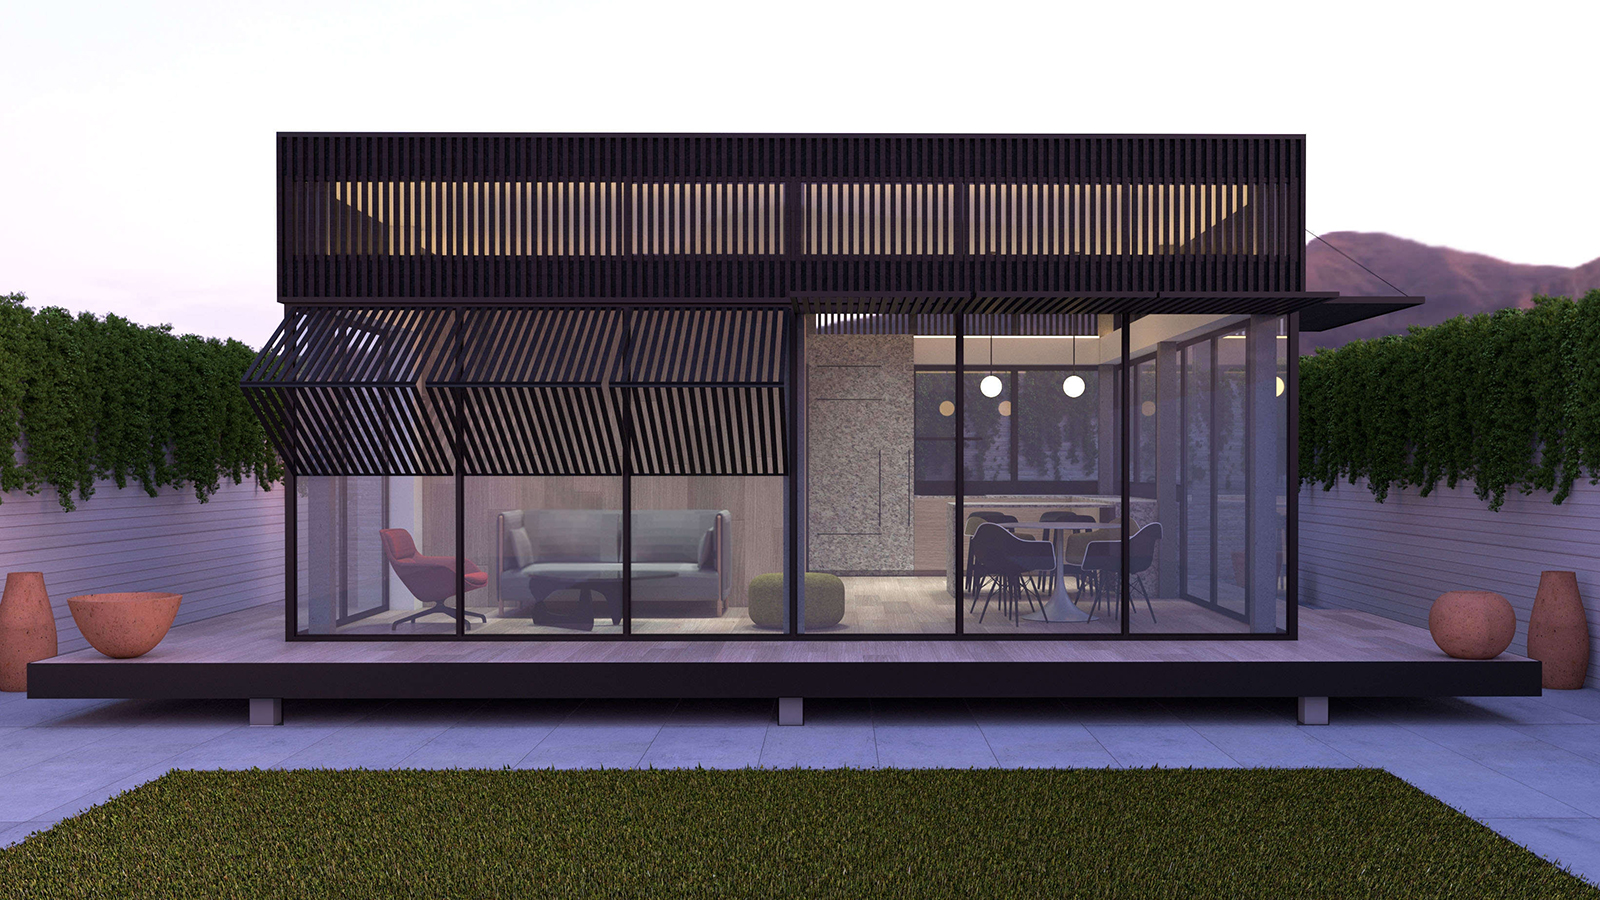 The YB1 LivingHome prefab house - a flexible accessory dwelling unit